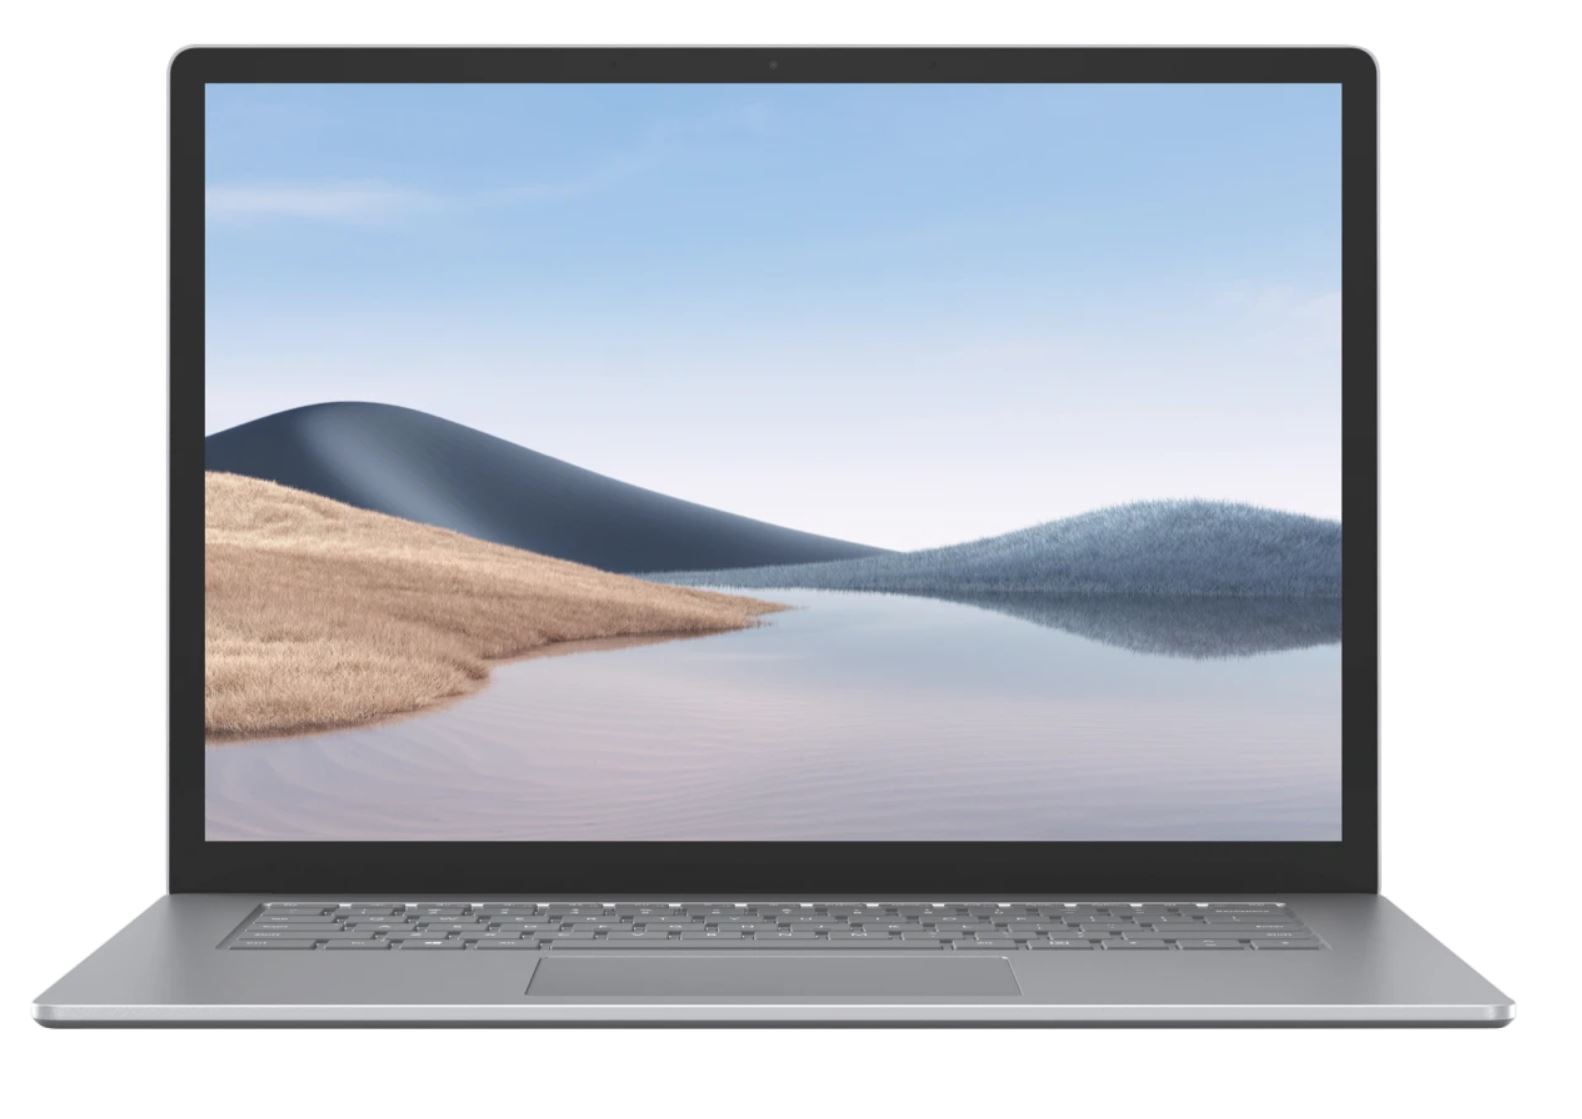 Microsoft Surface Laptop 4 15' TOUCH AMD Ryzen 7 4980U 8GB 256GB SSD Windows 10 Home AMD Radeon Graphics 17.5hr Battery 1 YR W10H Platinum (5UI-00016)